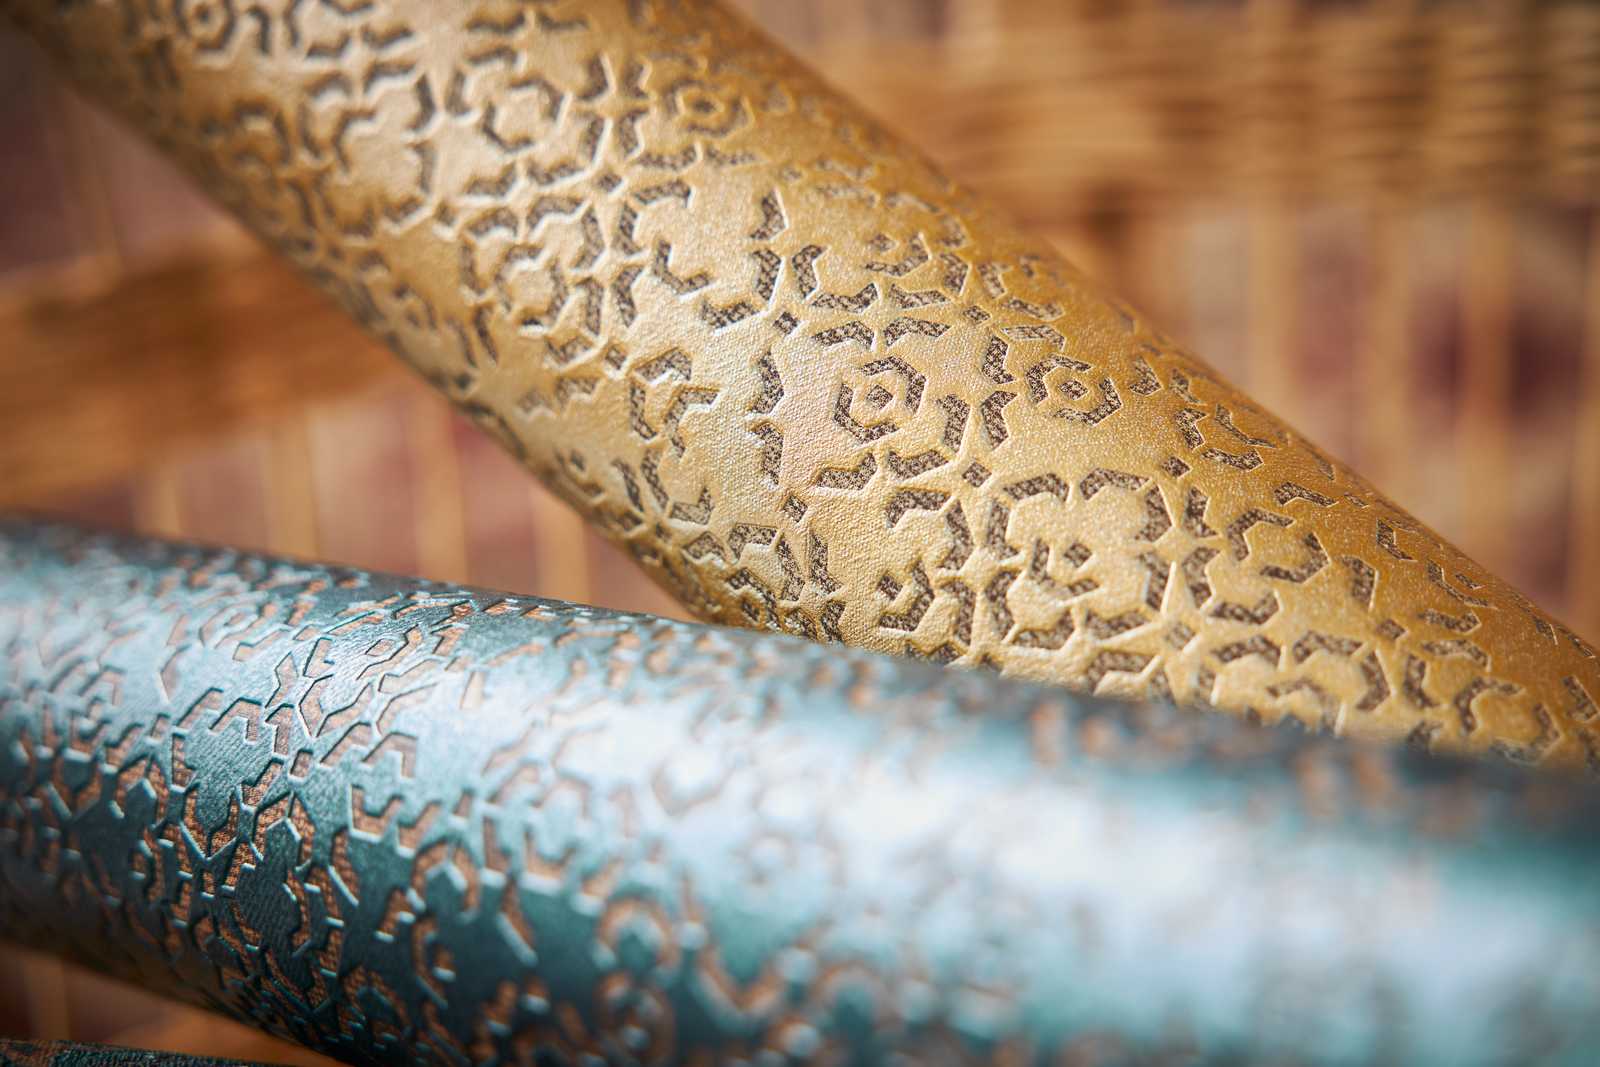             3D pattern wallpaper with metallic effect - blue, grey, metallic
        